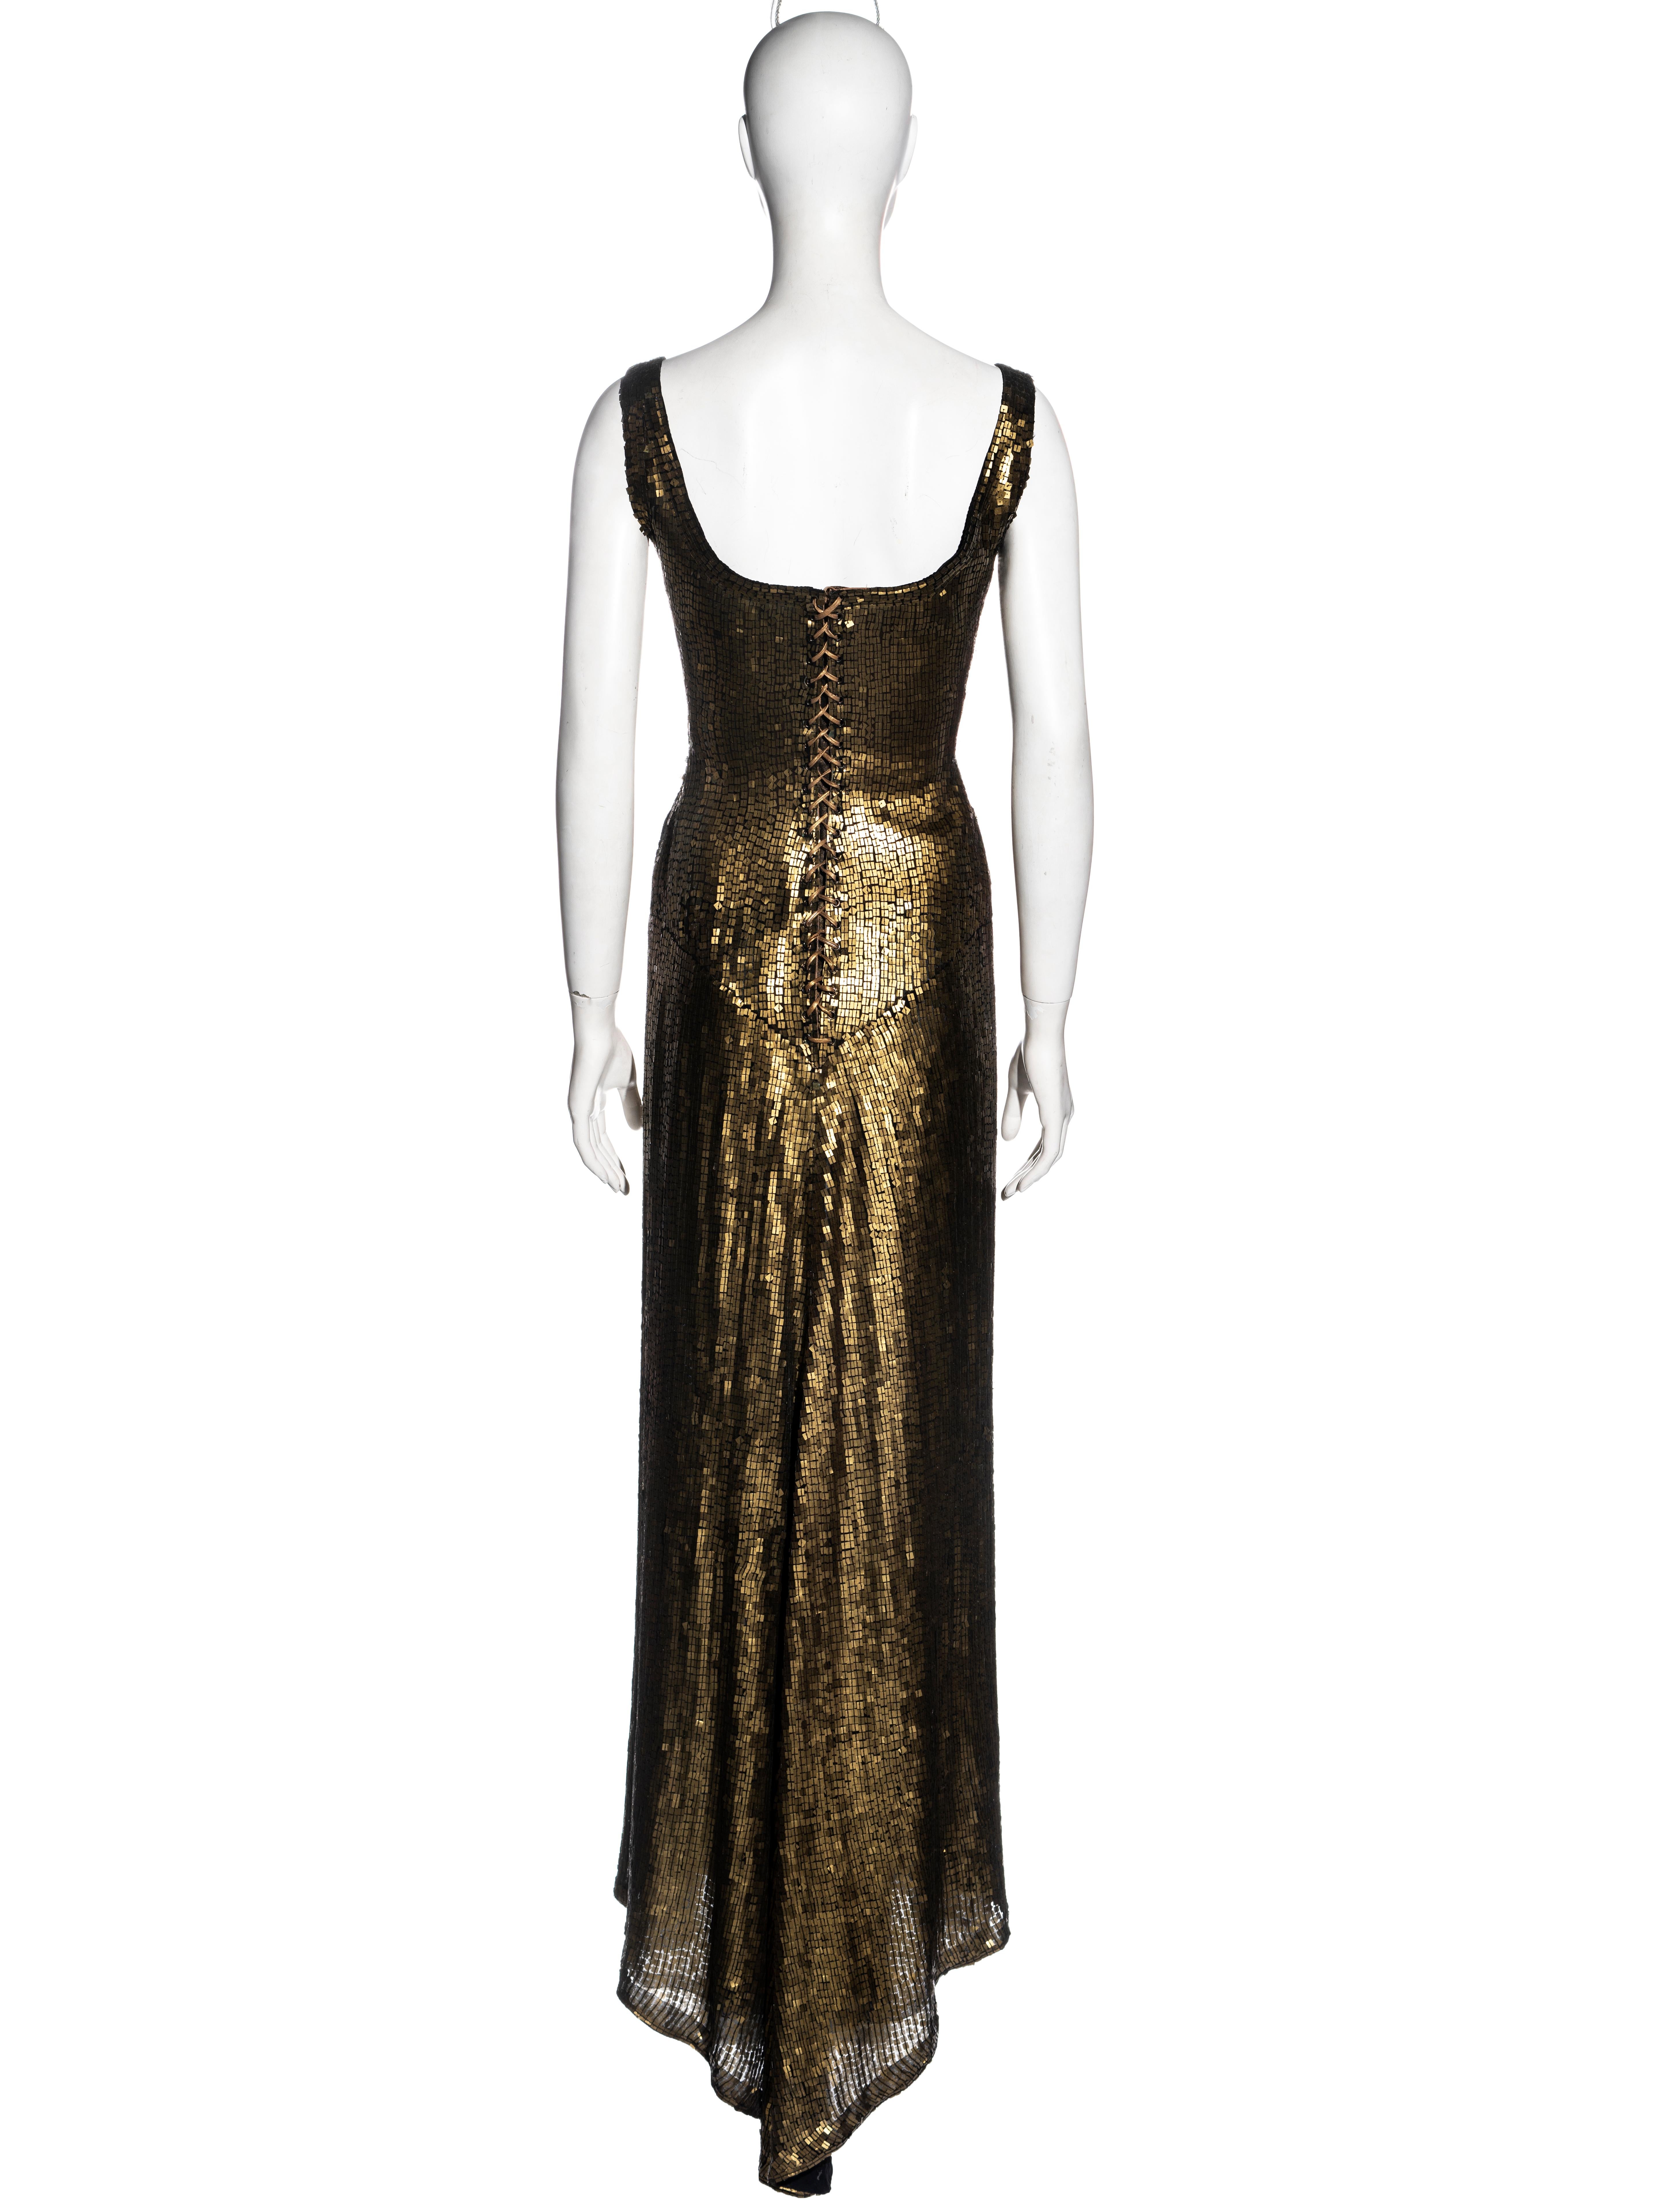 Azzedine Alaia couture metallic gold sequin evening dress, fw 1990 4